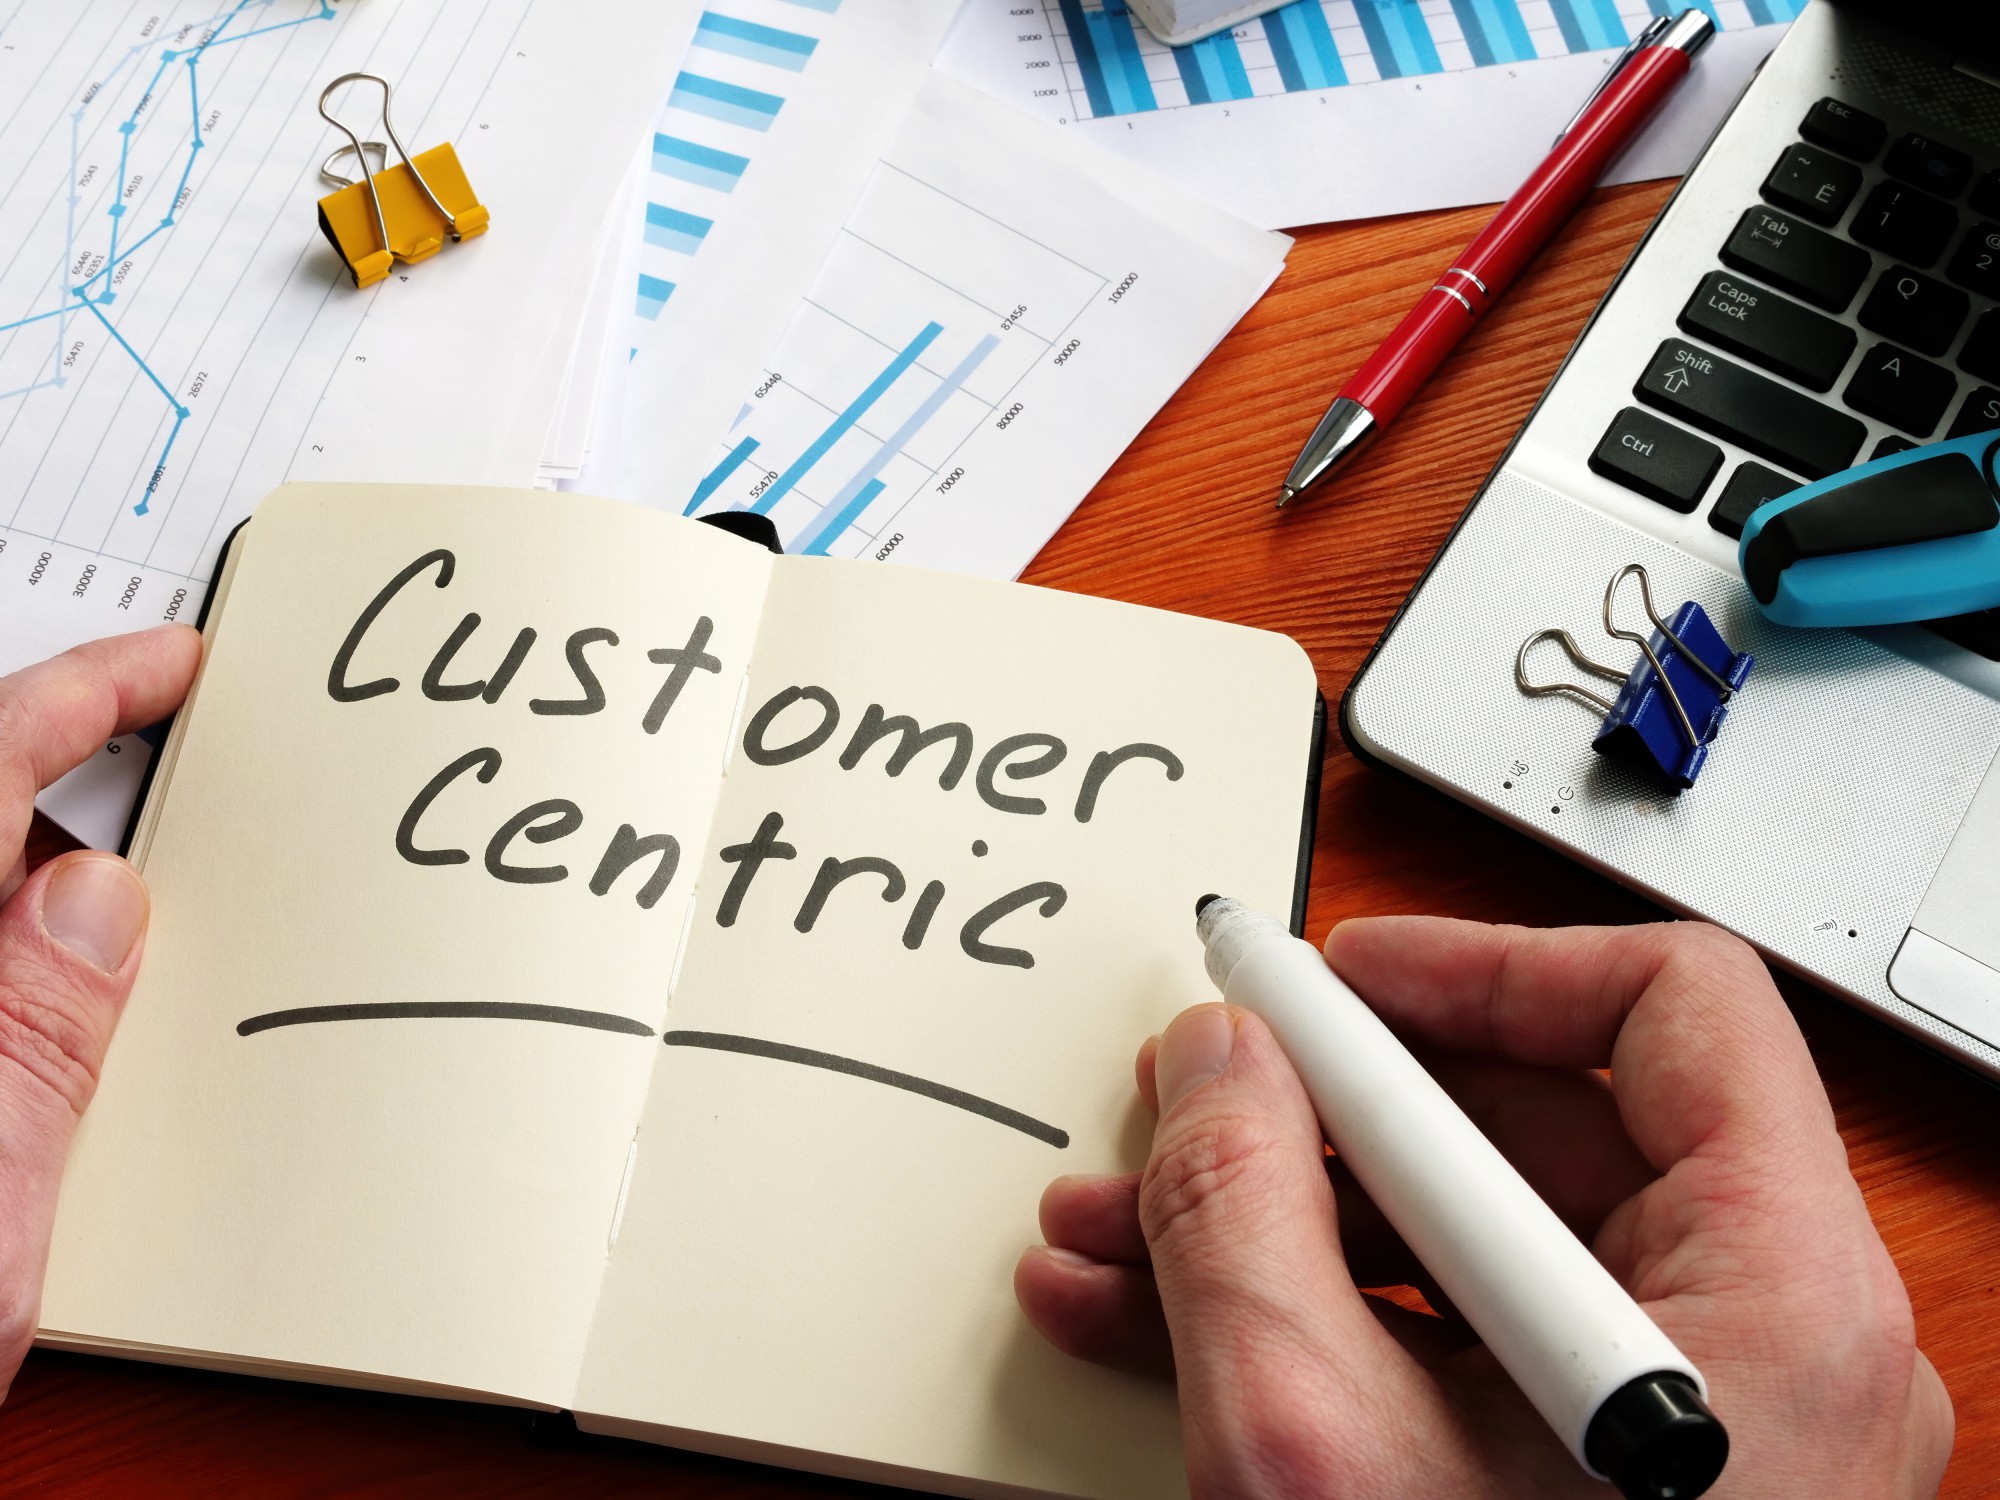 Customer Centric Strategy